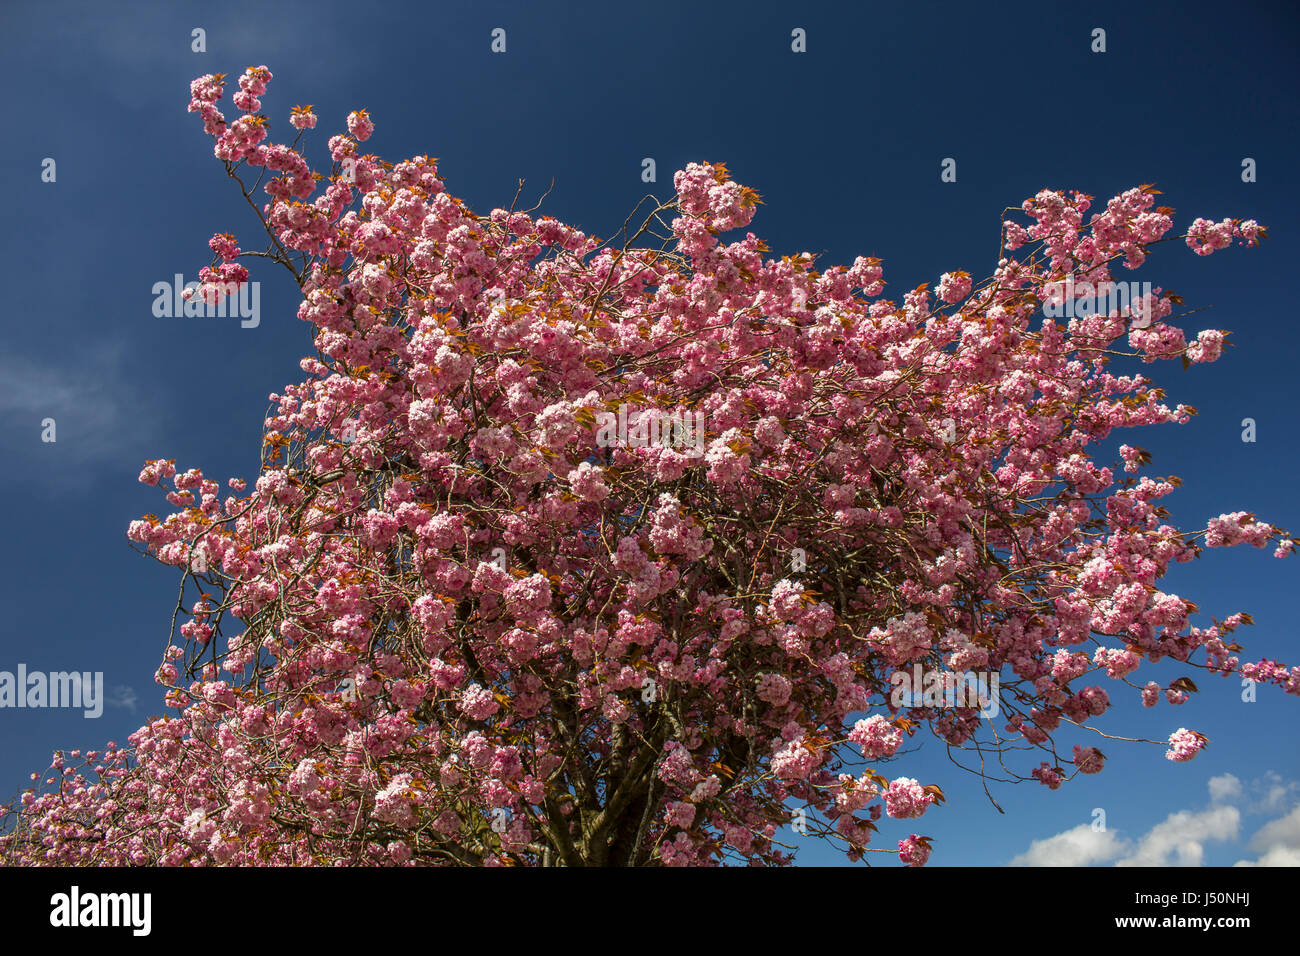 Cherry tree blossom against a blue sky. Stock Photo